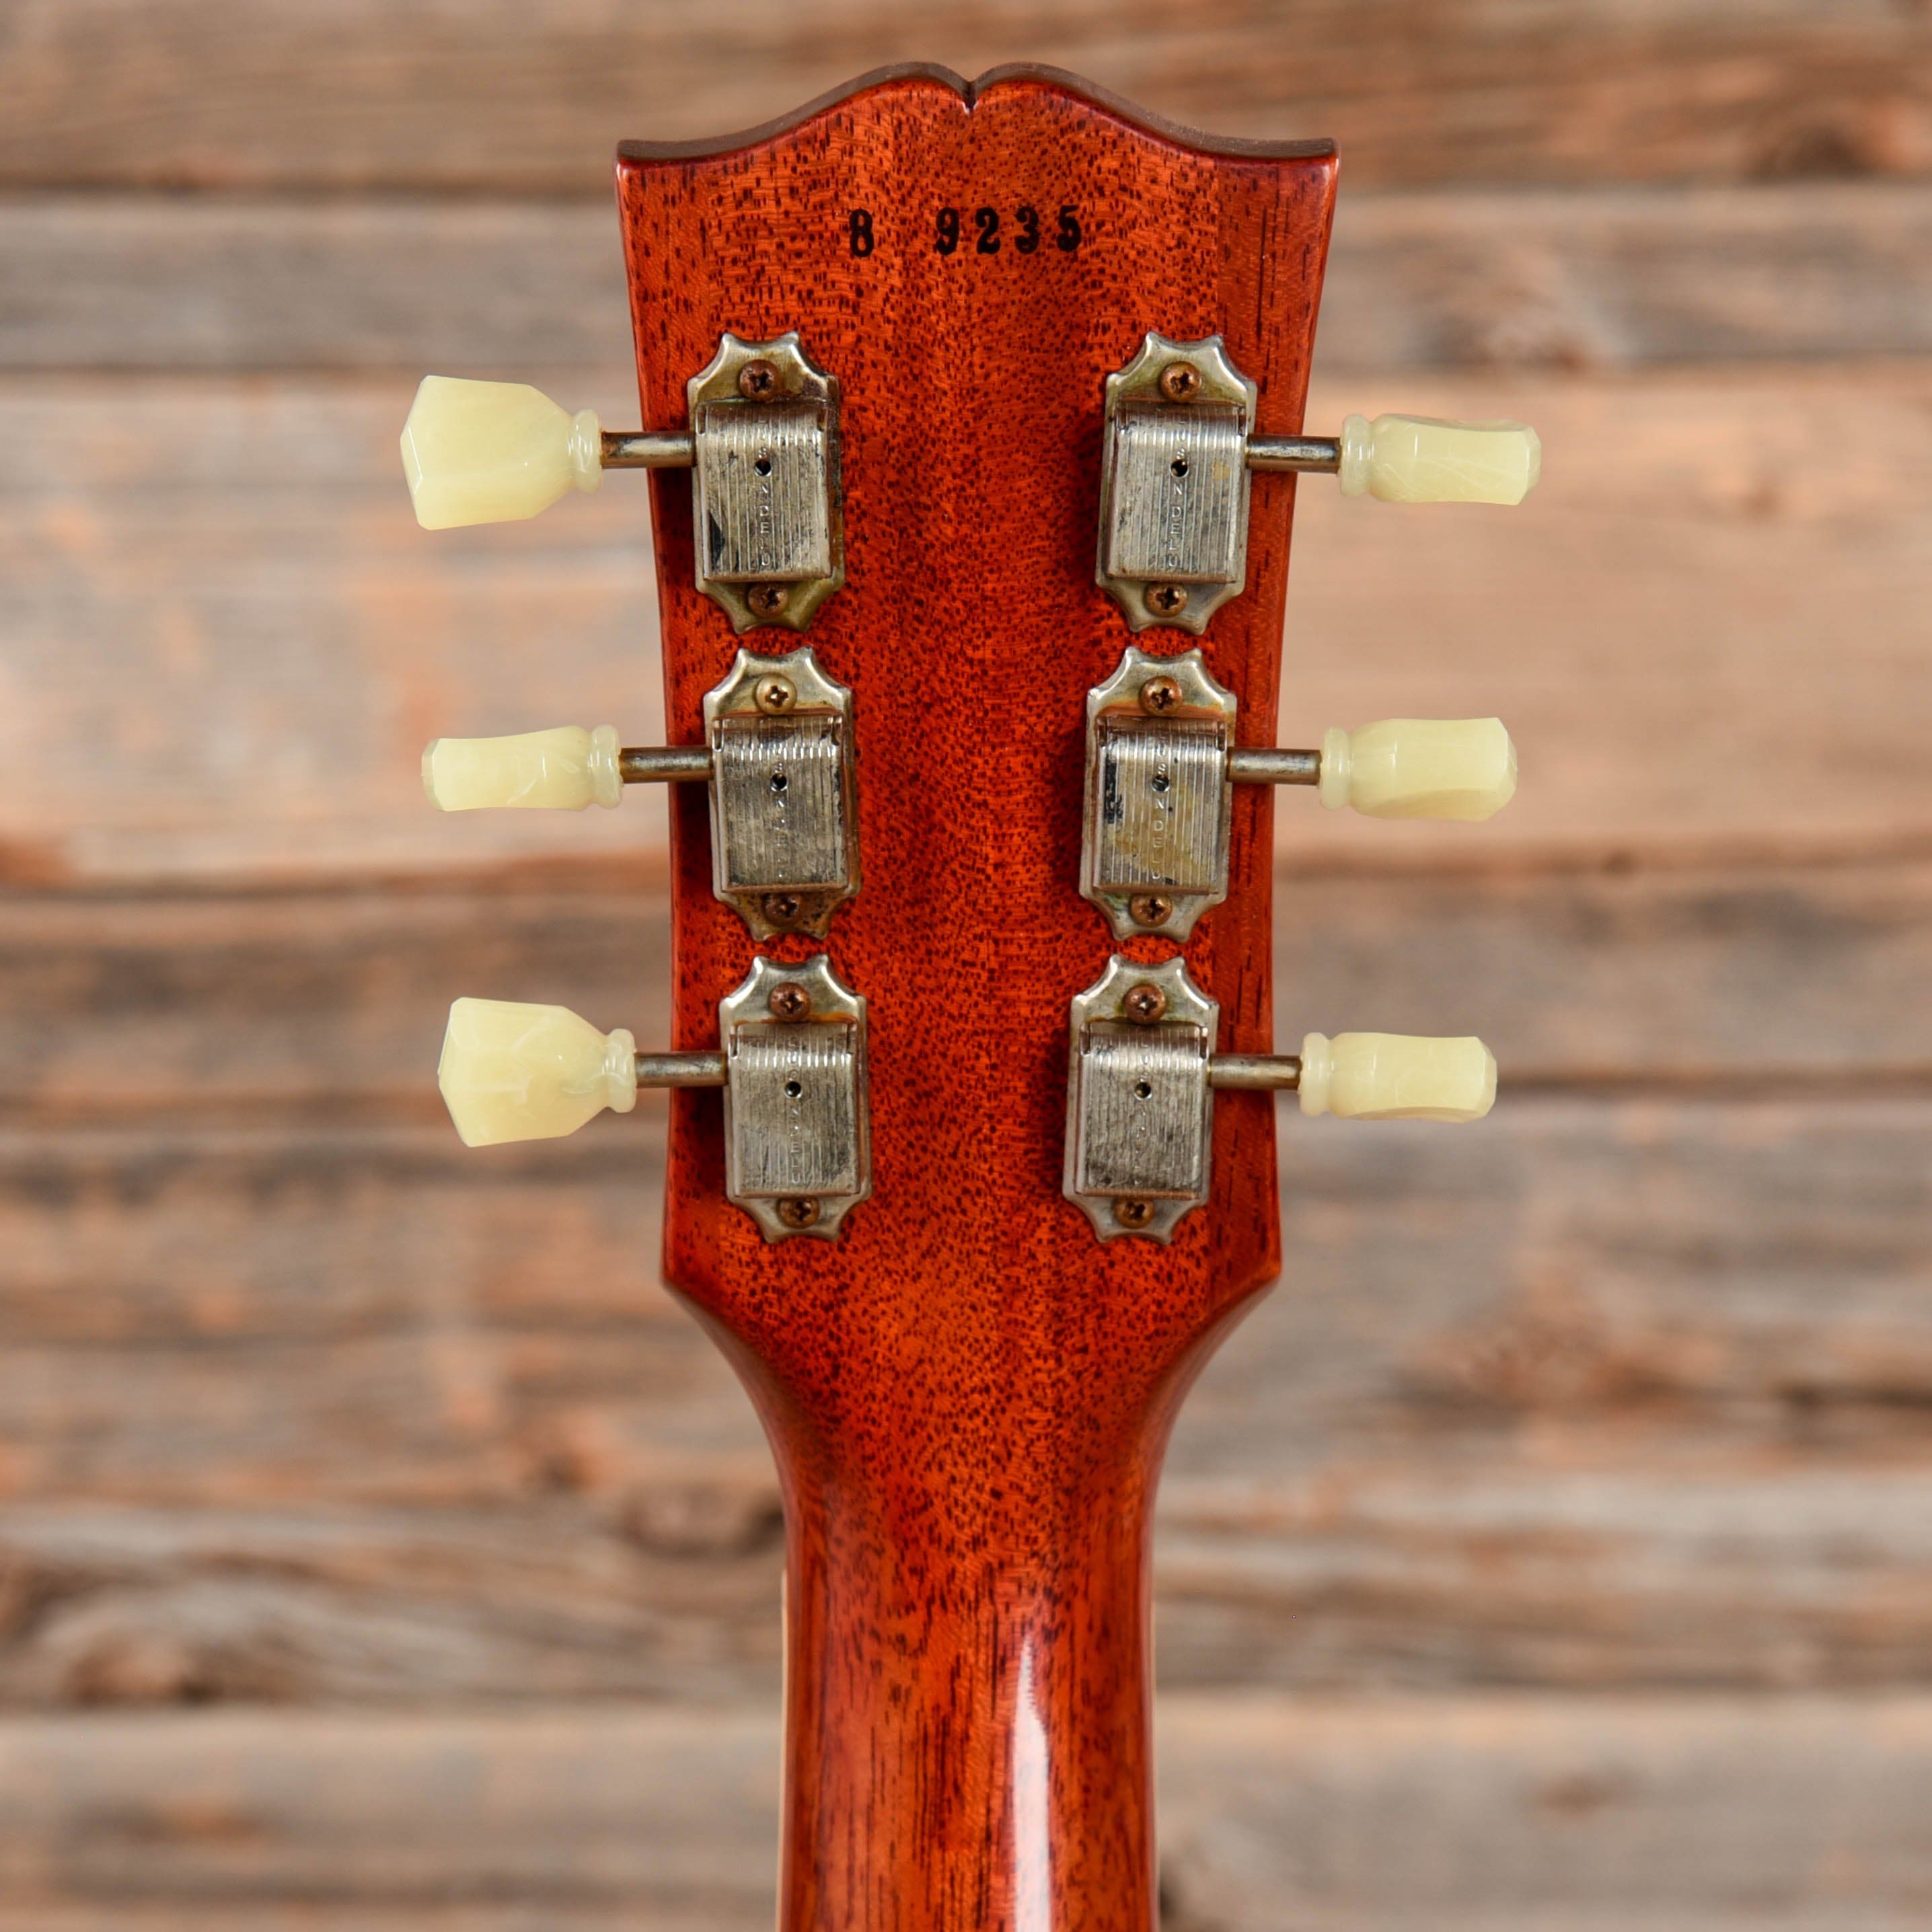 Gibson '58 Les Paul Standard Sunburst 2019 Electric Guitars / Solid Body